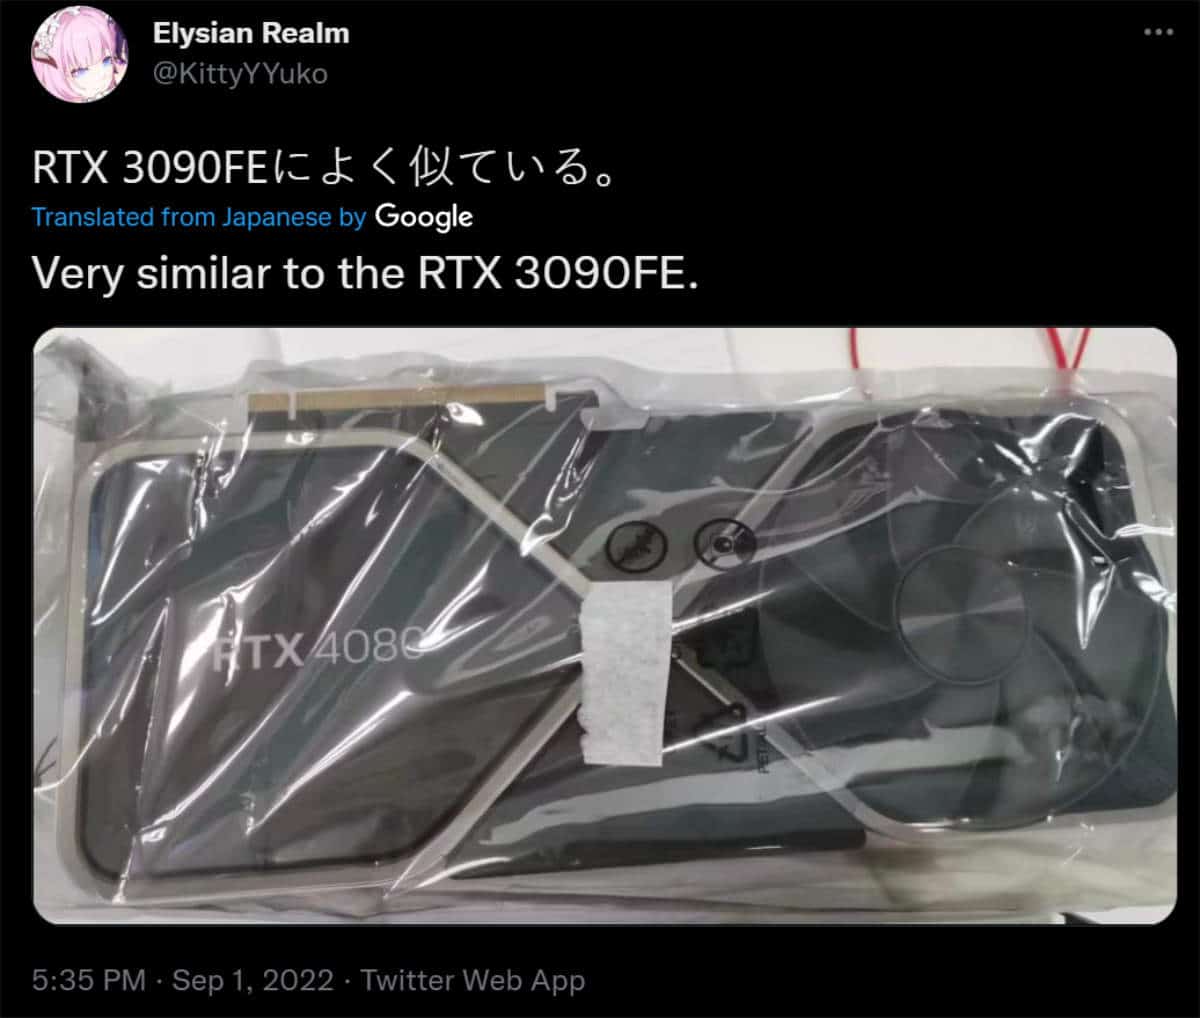 Potential RTX 4080 GPU pictured